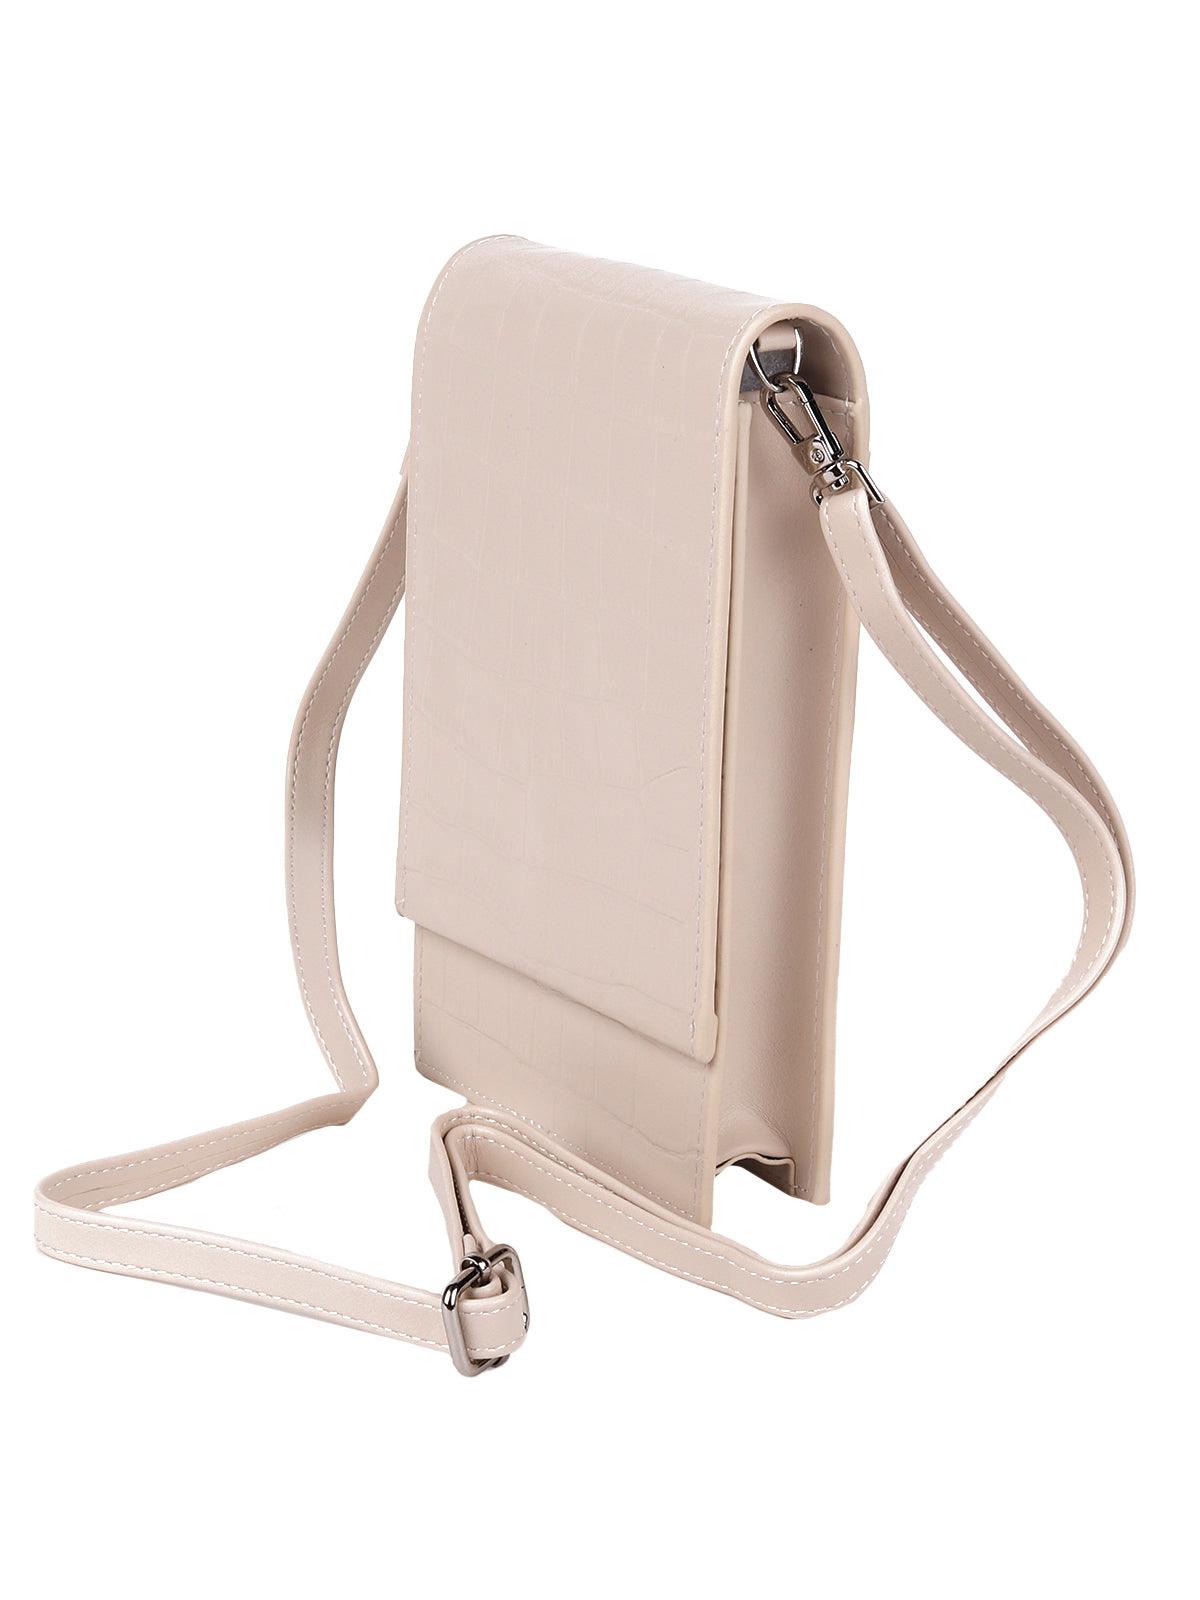 Light pink rectangular sling bag for women - Odette